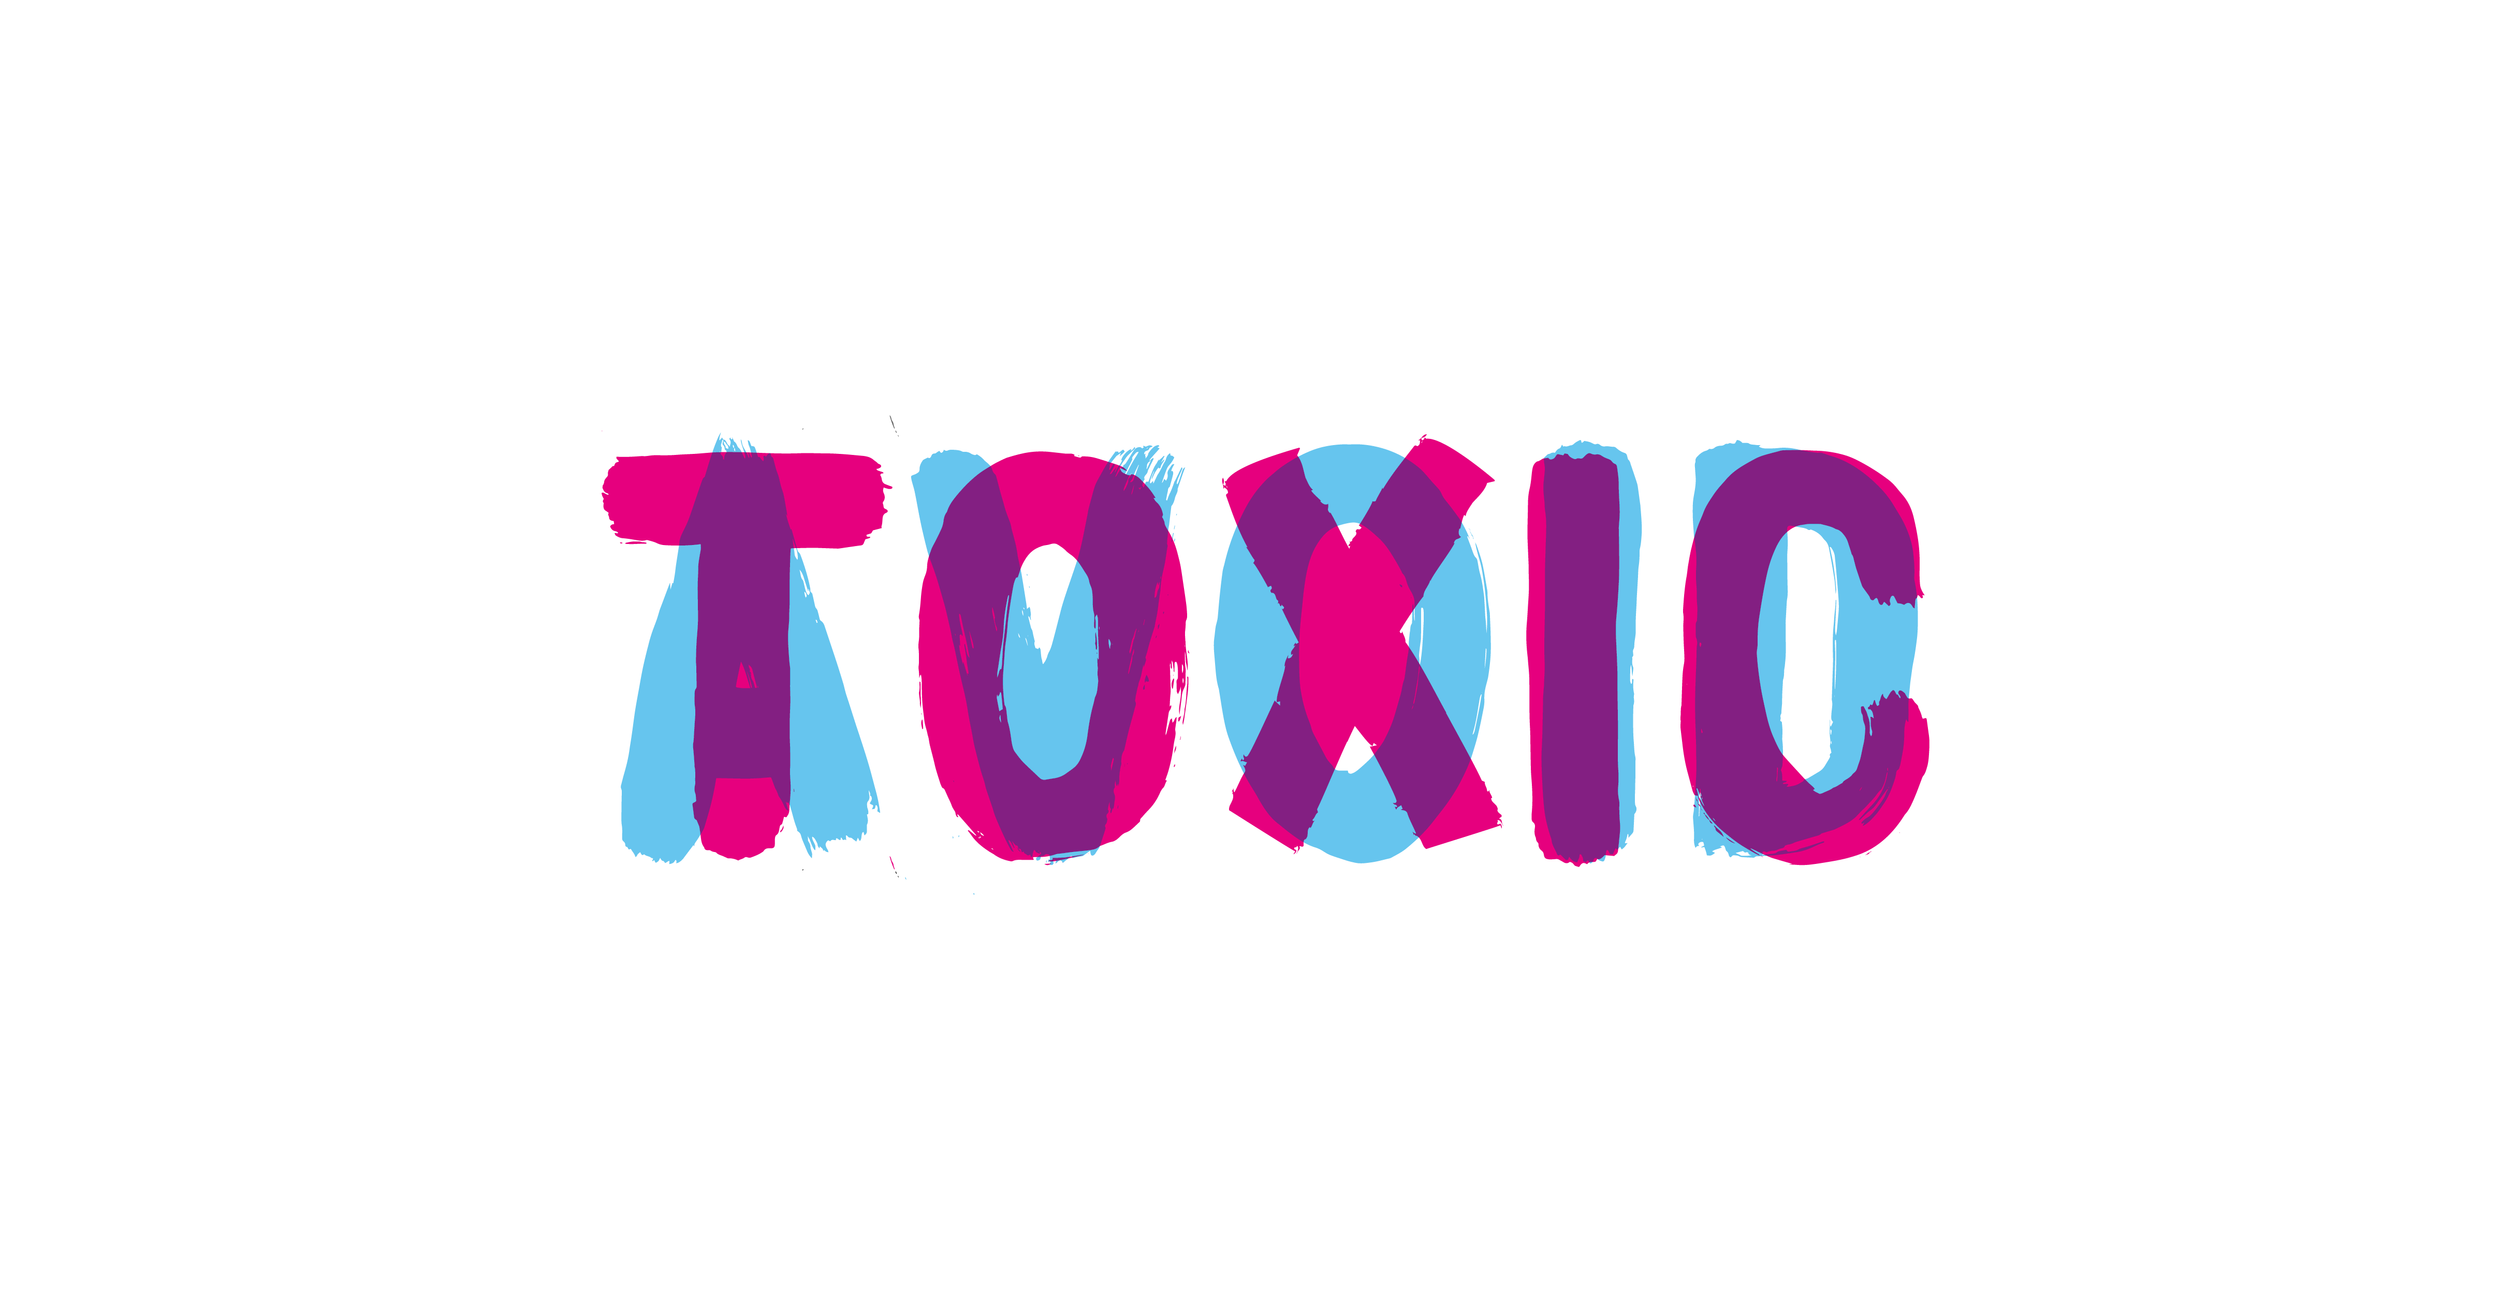 Avoid_Toxic_Zeichenfläche 1 Kopie.PNG